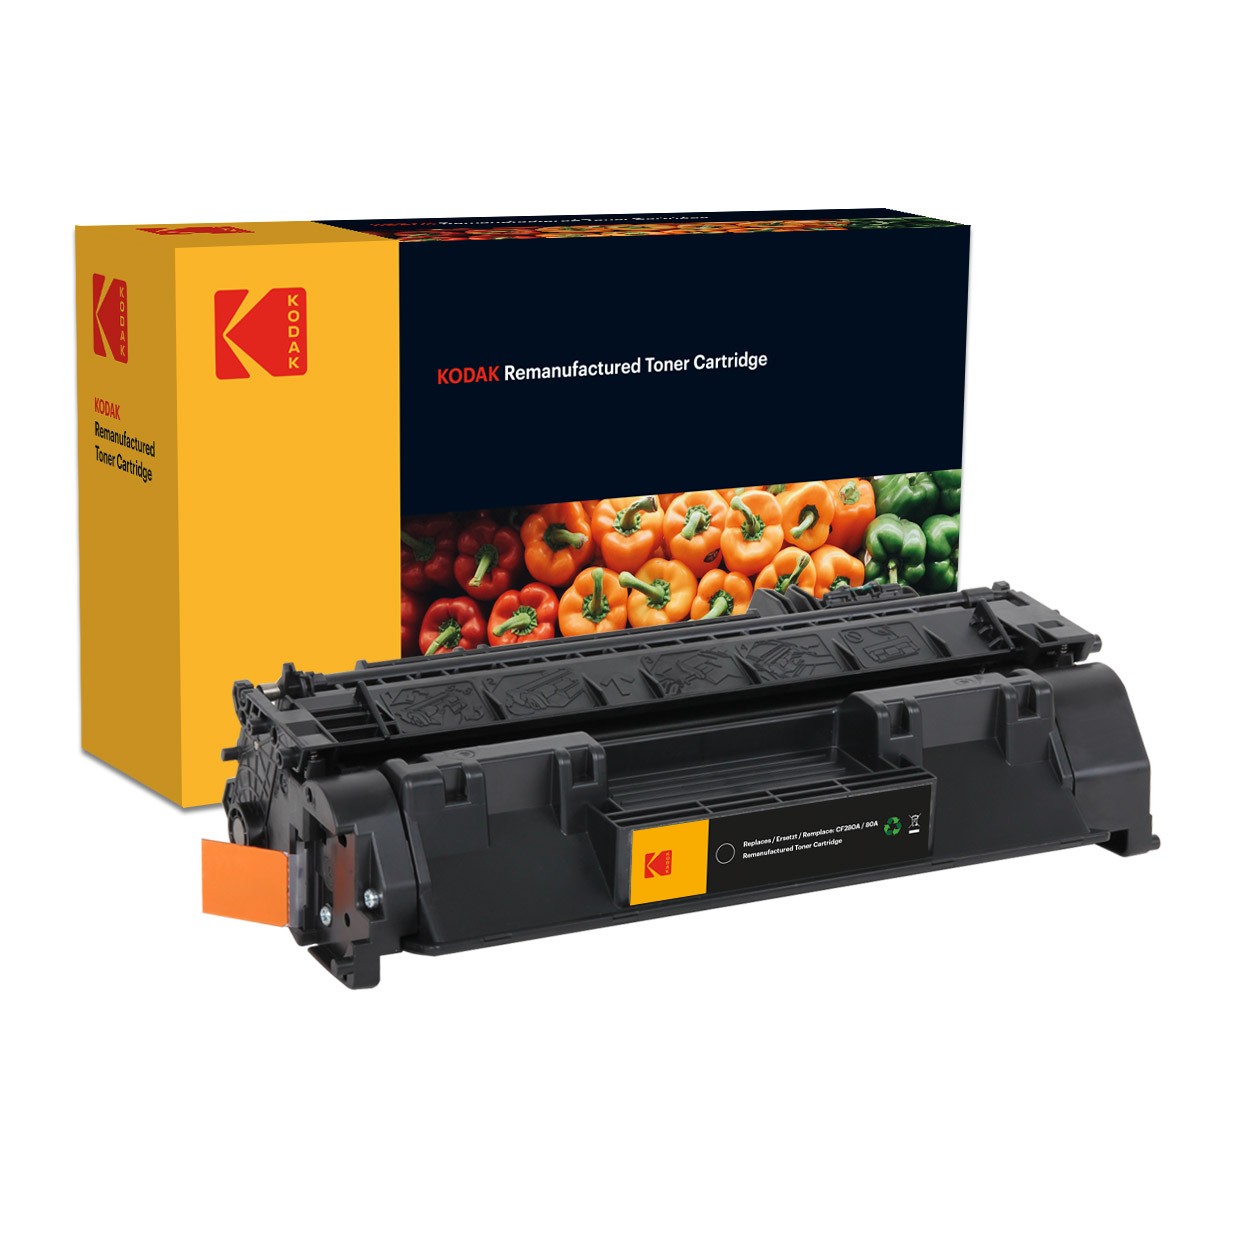 Cartus toner original Kodak compatibil HP CF280A Black Premium Kodak cartuseria.ro imagine 2022 cartile.ro